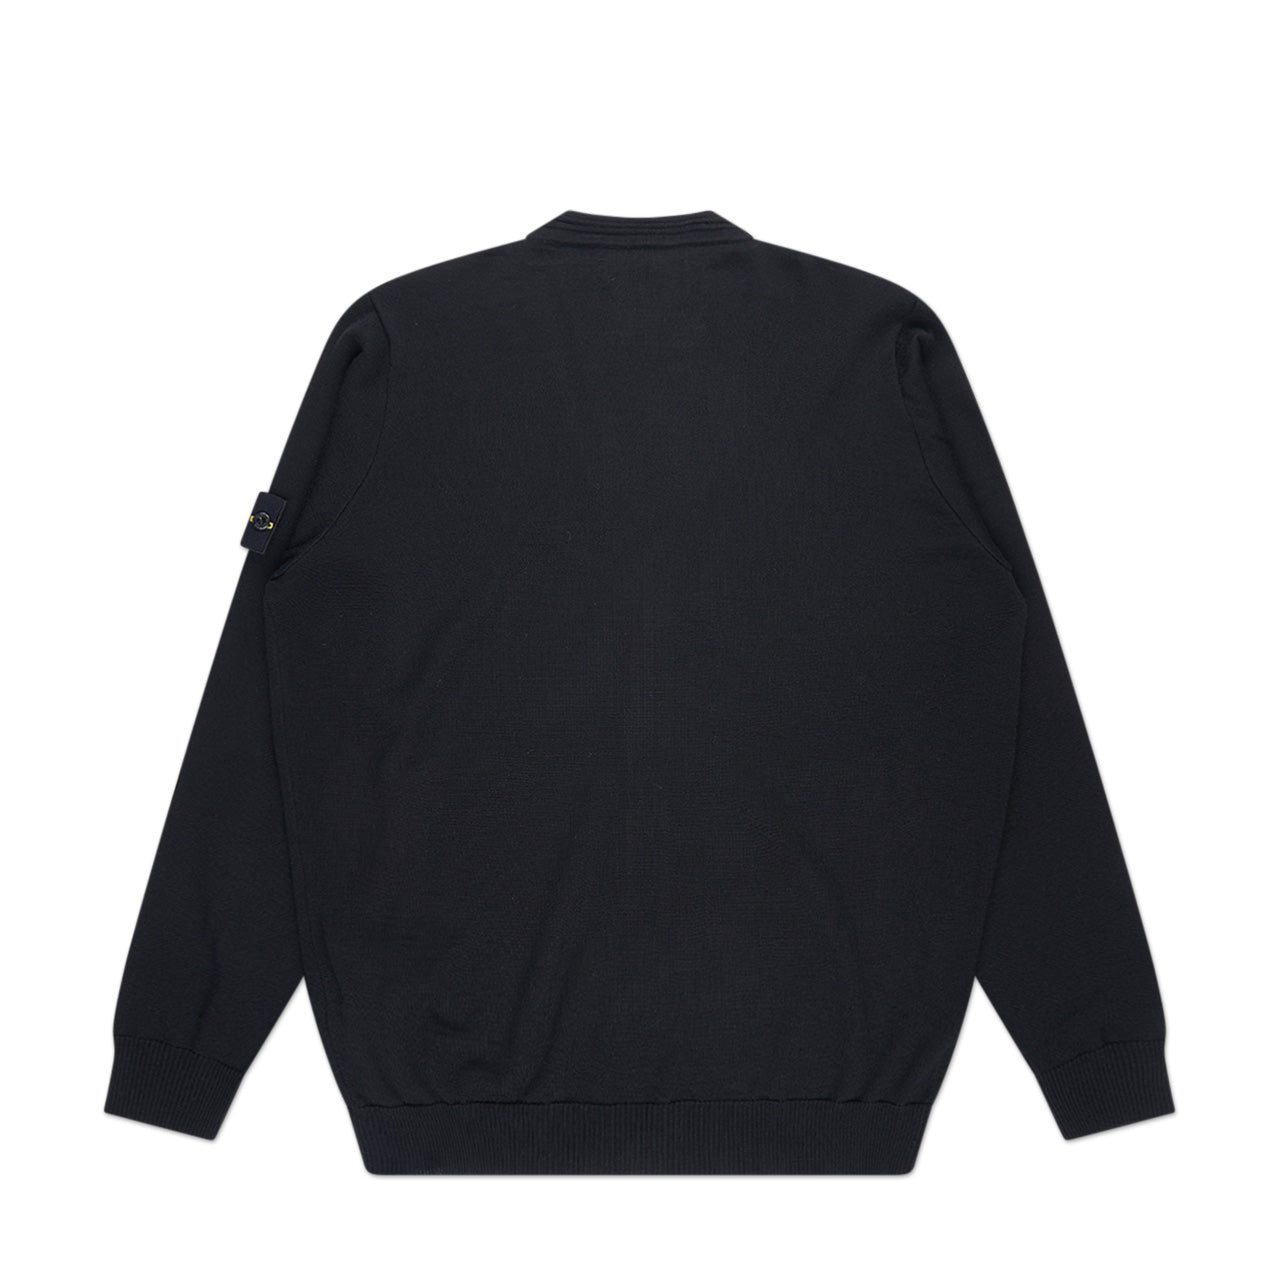 stone island knitted sweater (black)